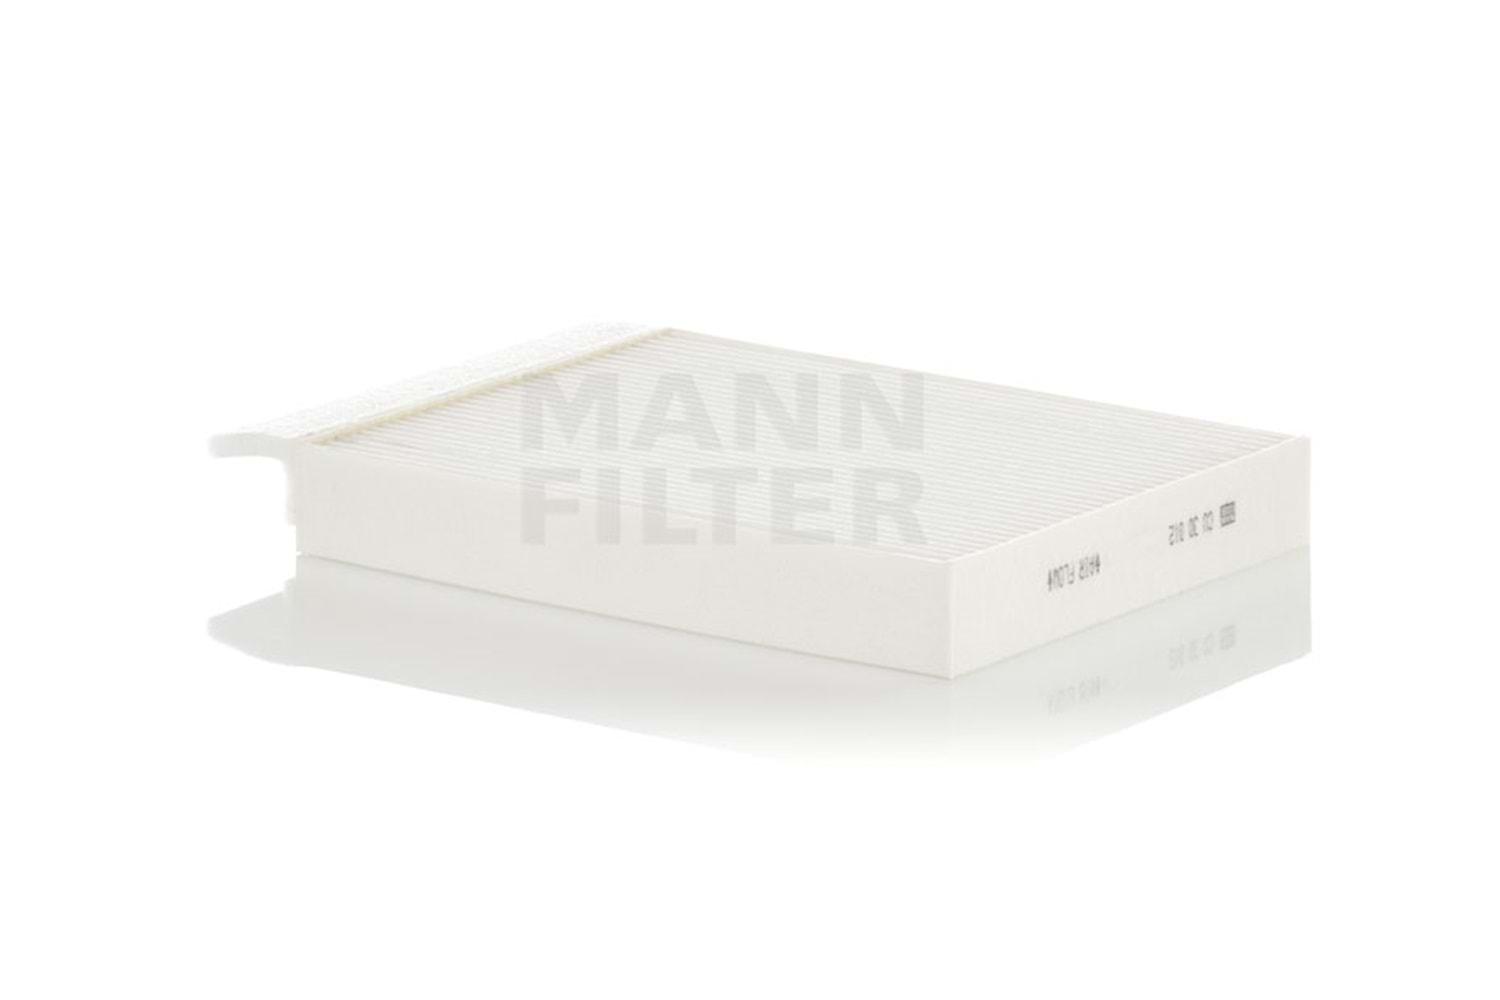 Mann Filter Polen Filtresi CU30012